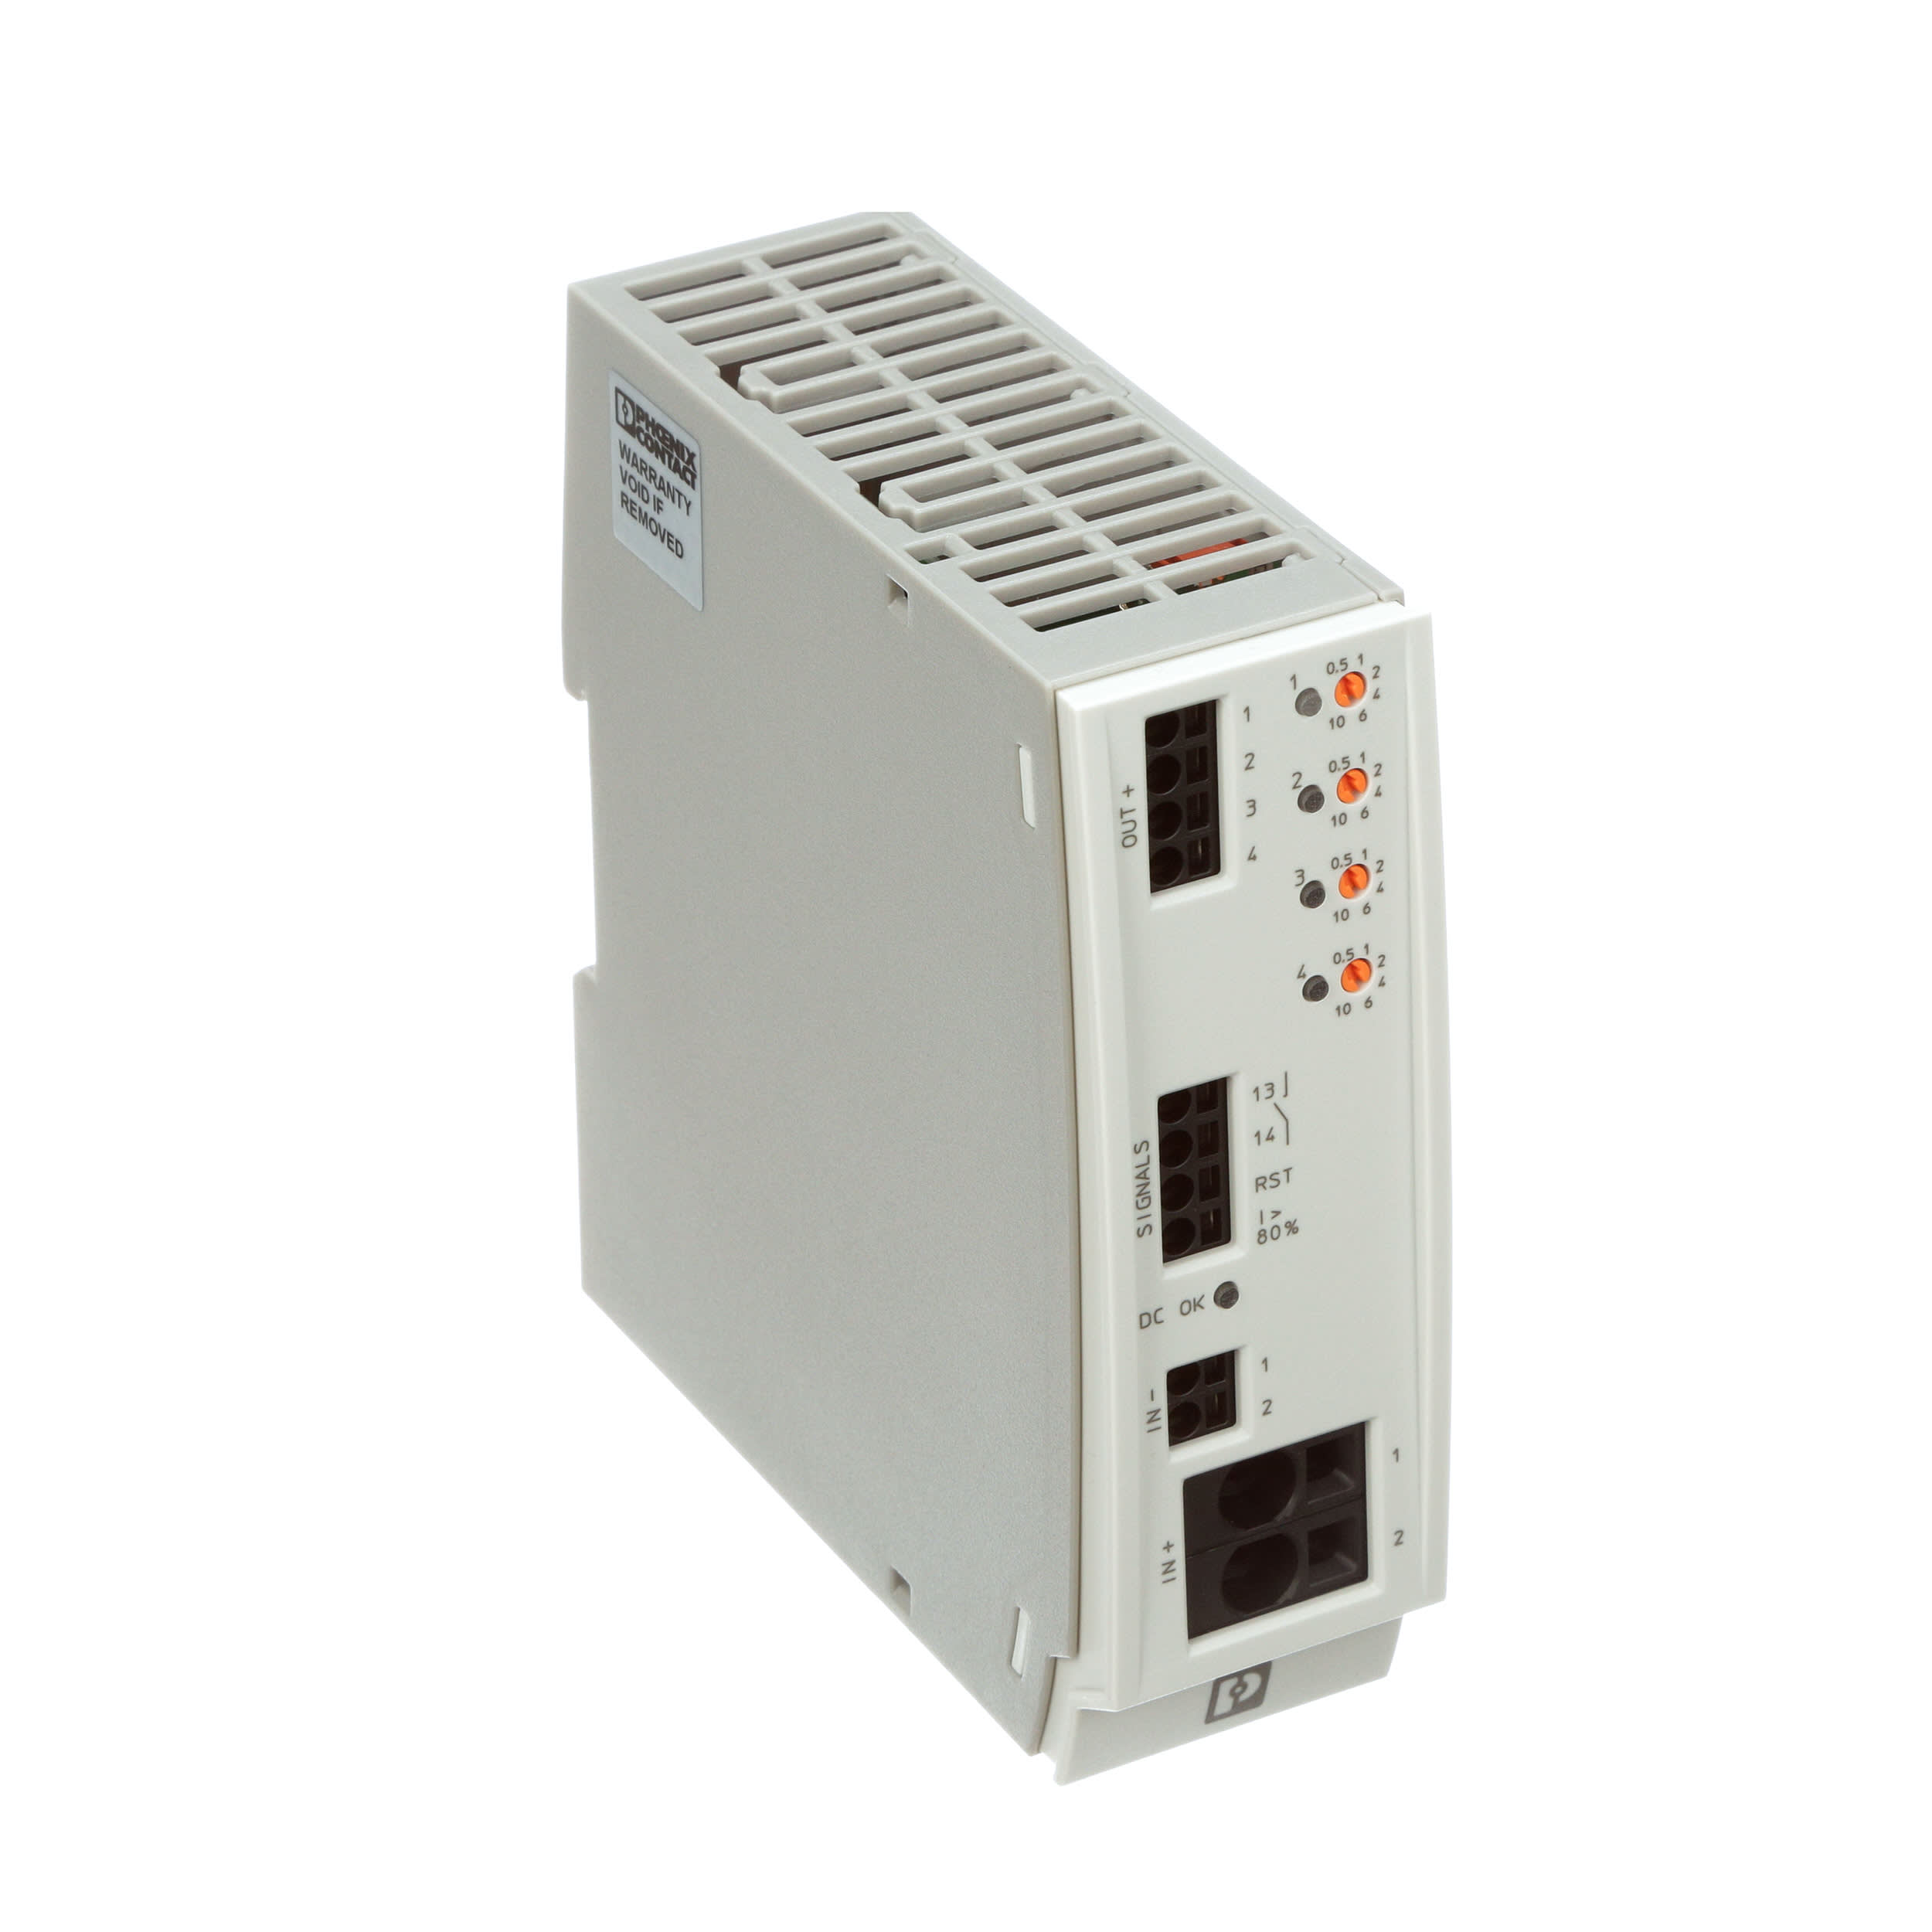 Phoenix Contact device protection switch electronically cbmc E4 24DC/1-10ANO 